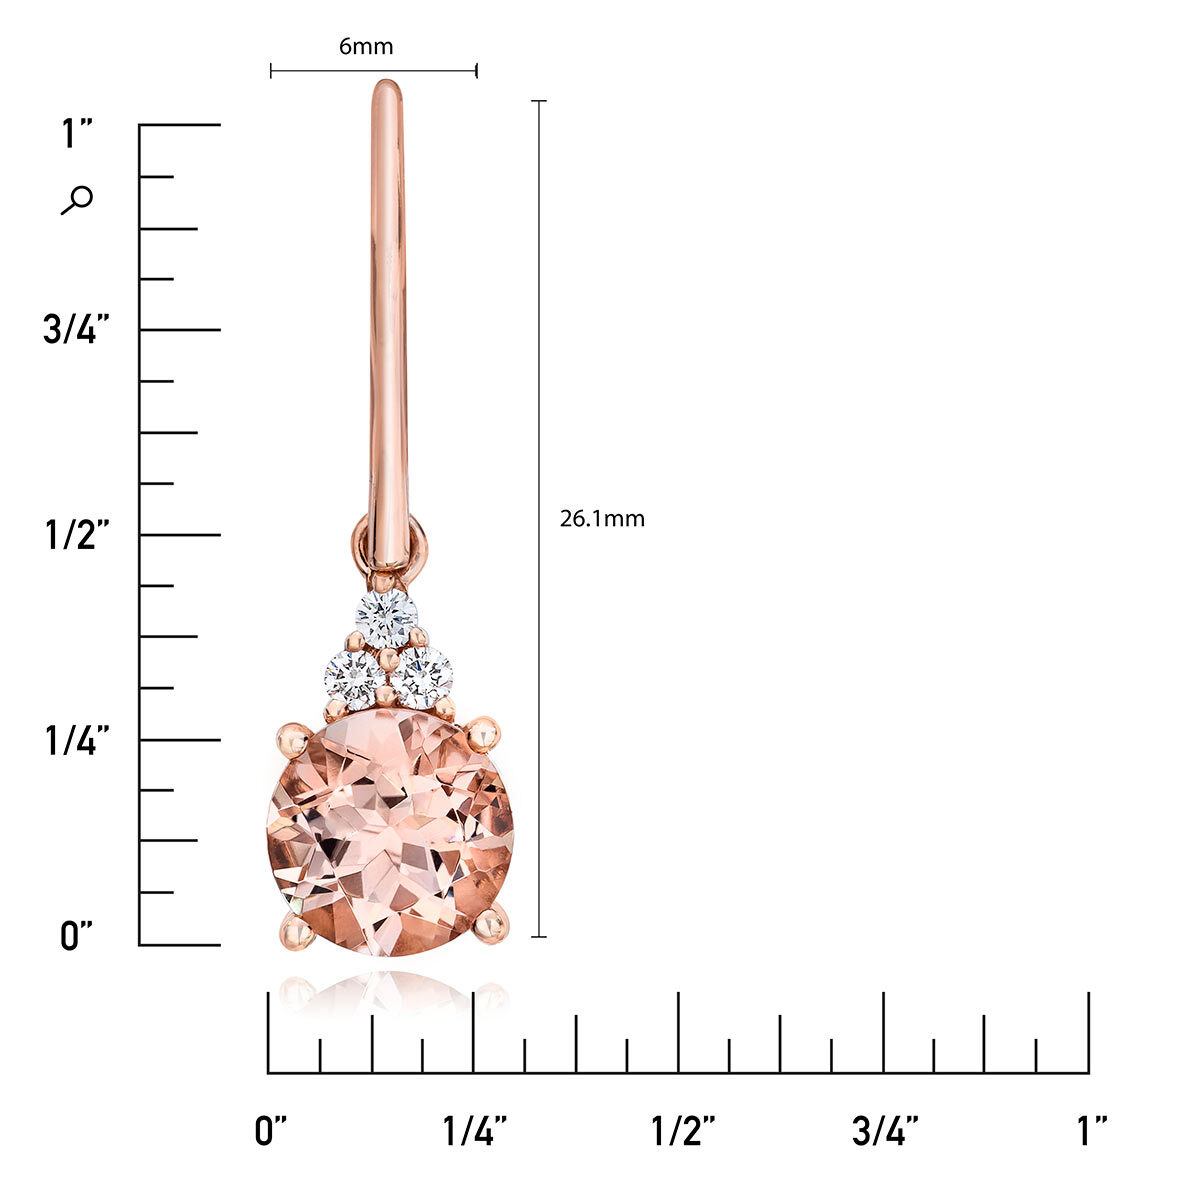 Morganite & 0.13ctw Diamond Earrings, 14k Rose Gold